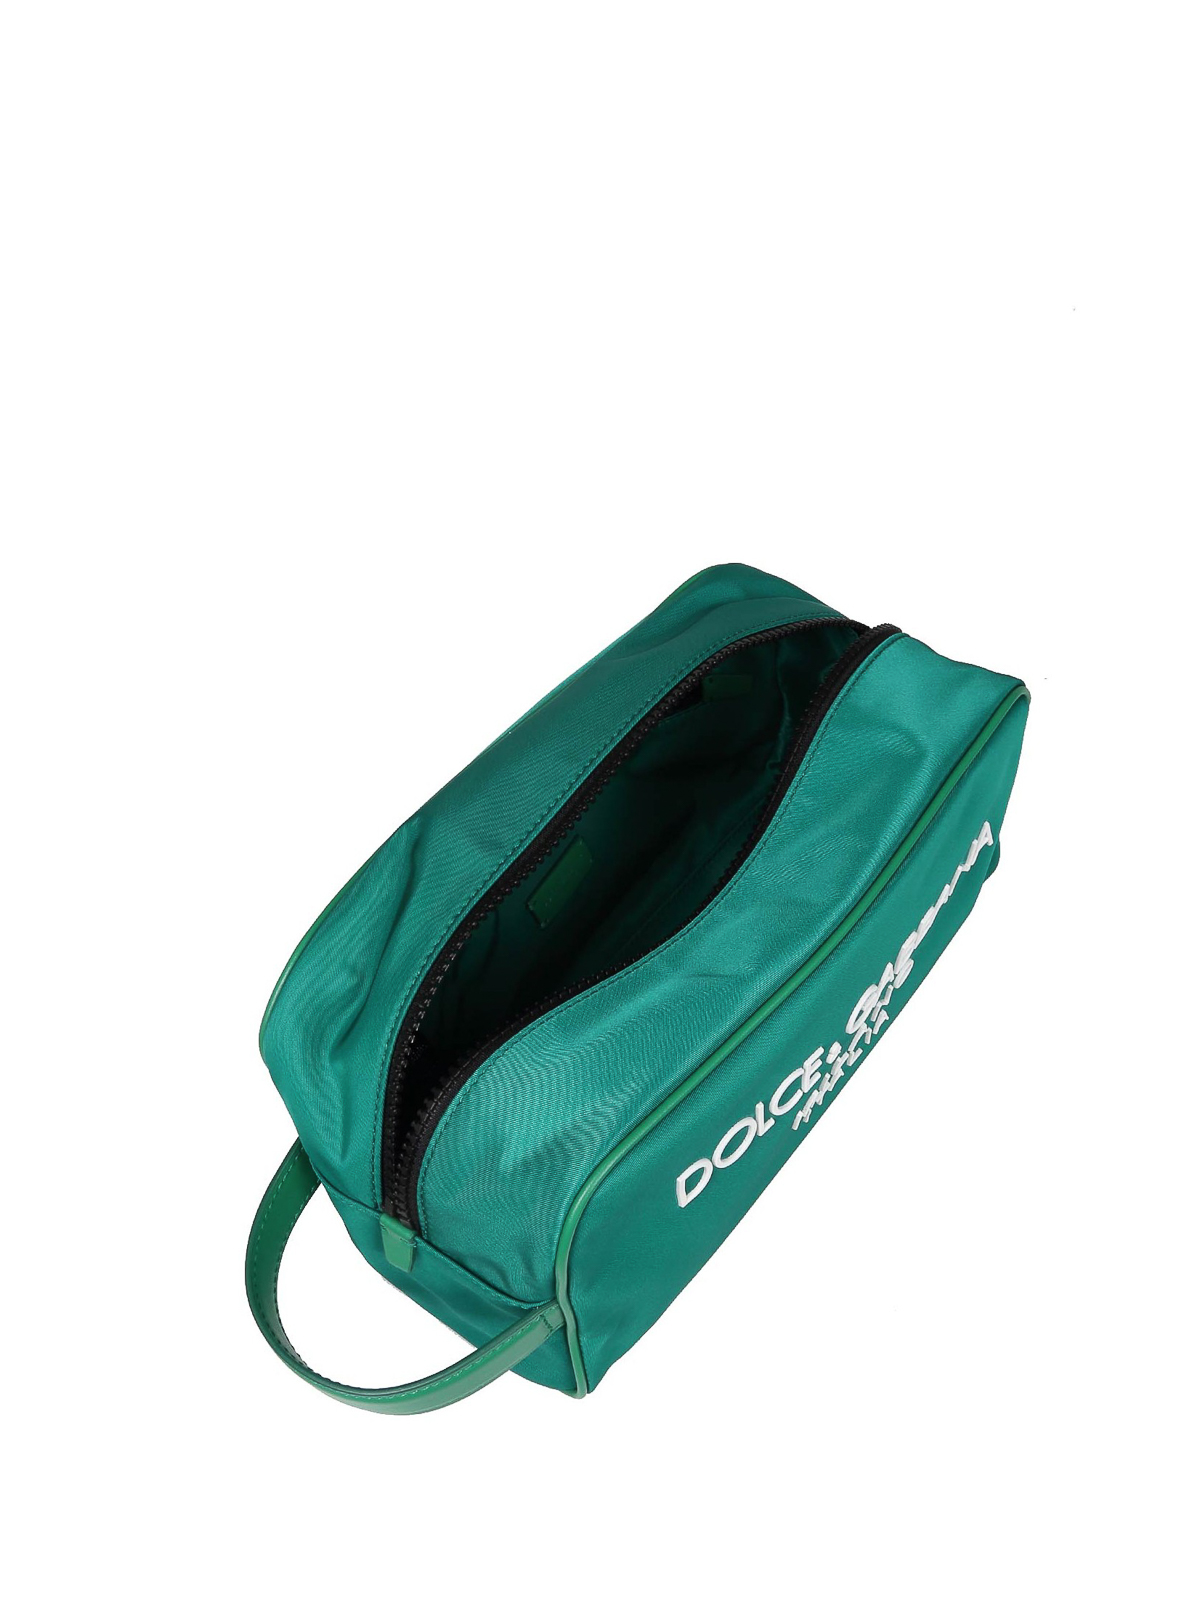 Green Handbags & Purses | Kate Spade New York